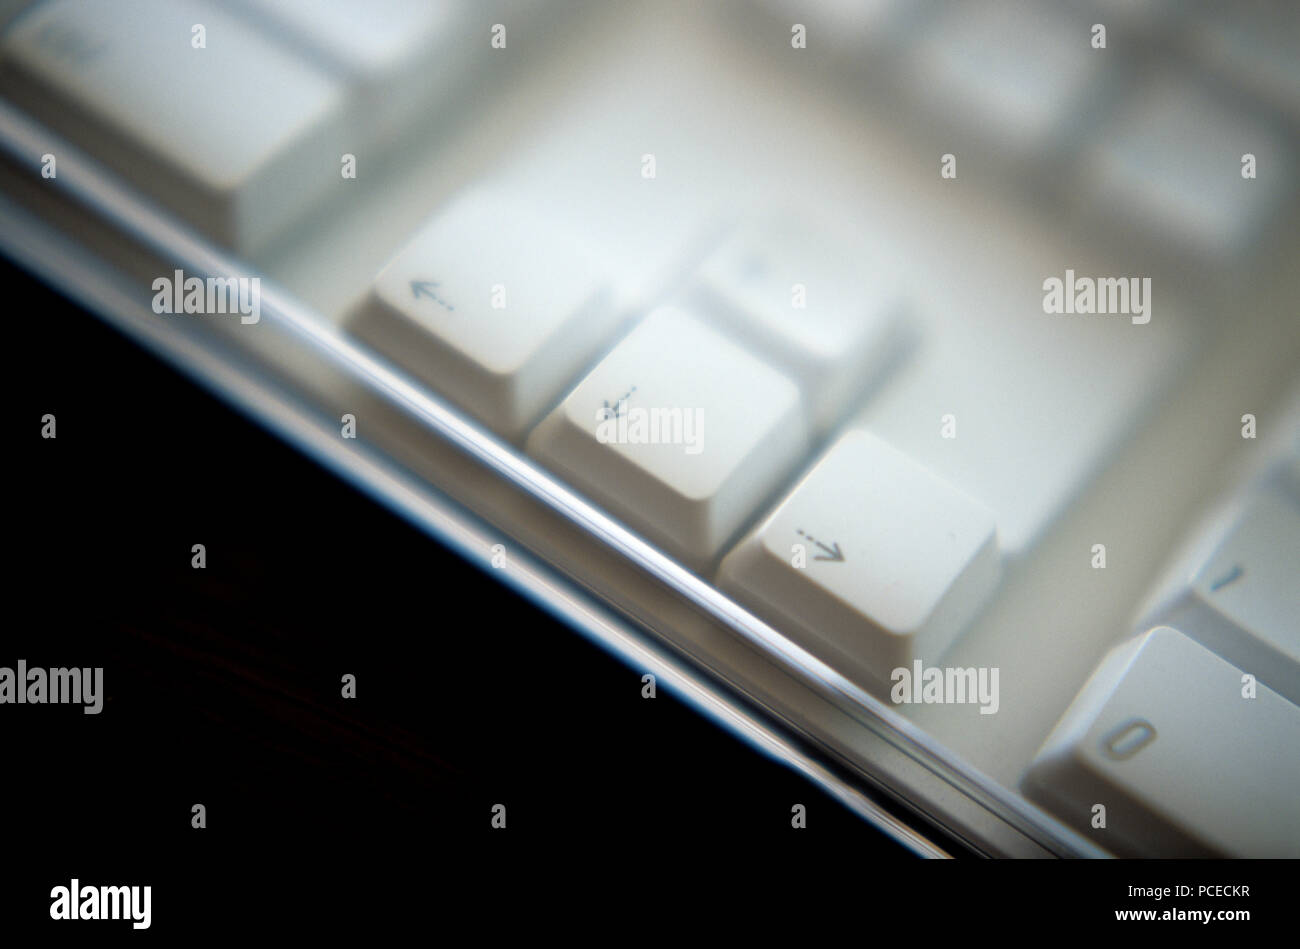 Apple iMac G5 computer keyboard Stock Photo